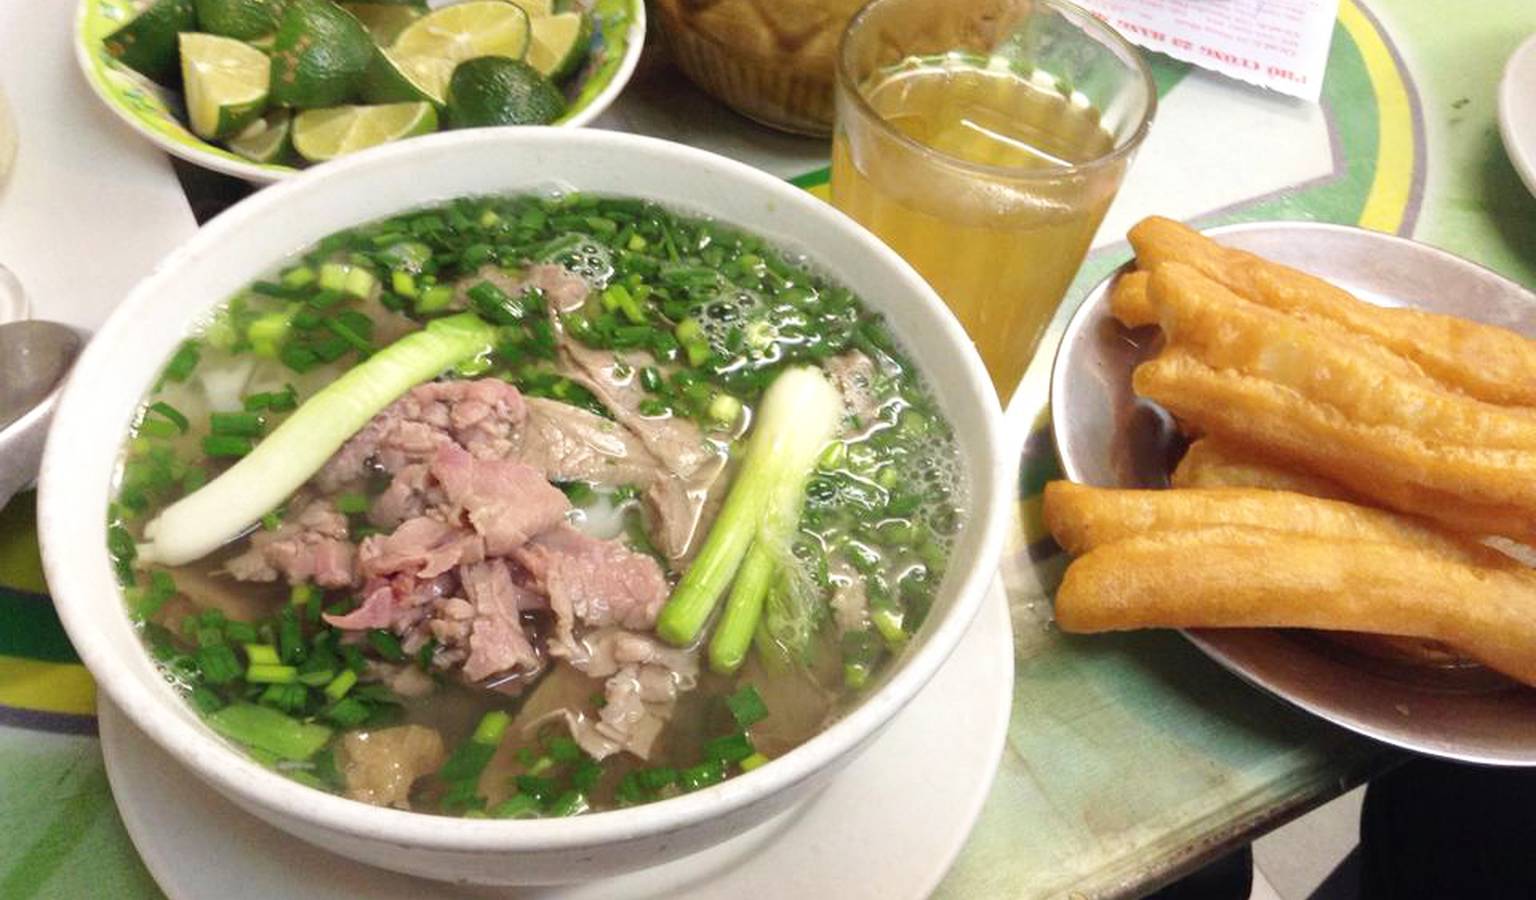 Pho Cuong - Pho Bo Hanoi - Have you ever tried this tasty dish